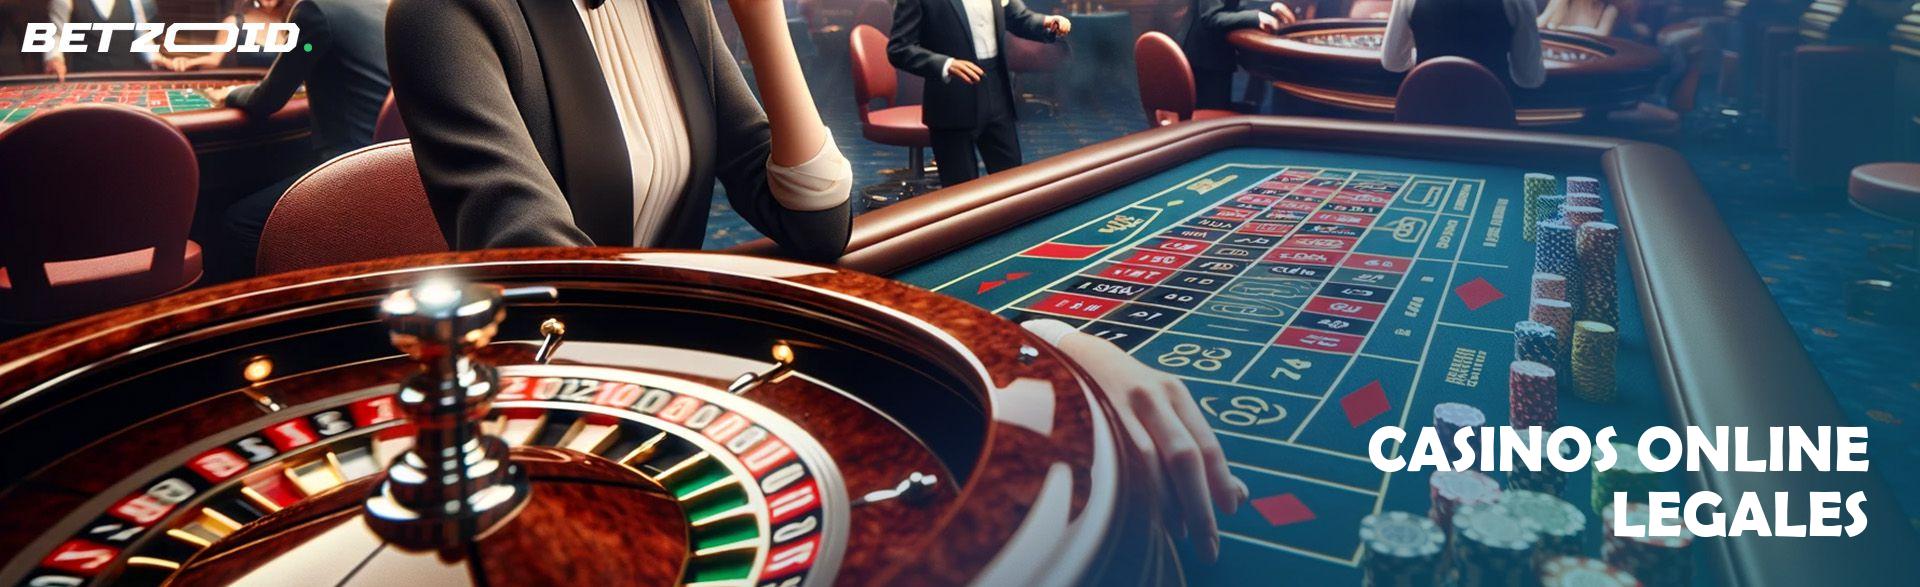 Casinos Online Legales.